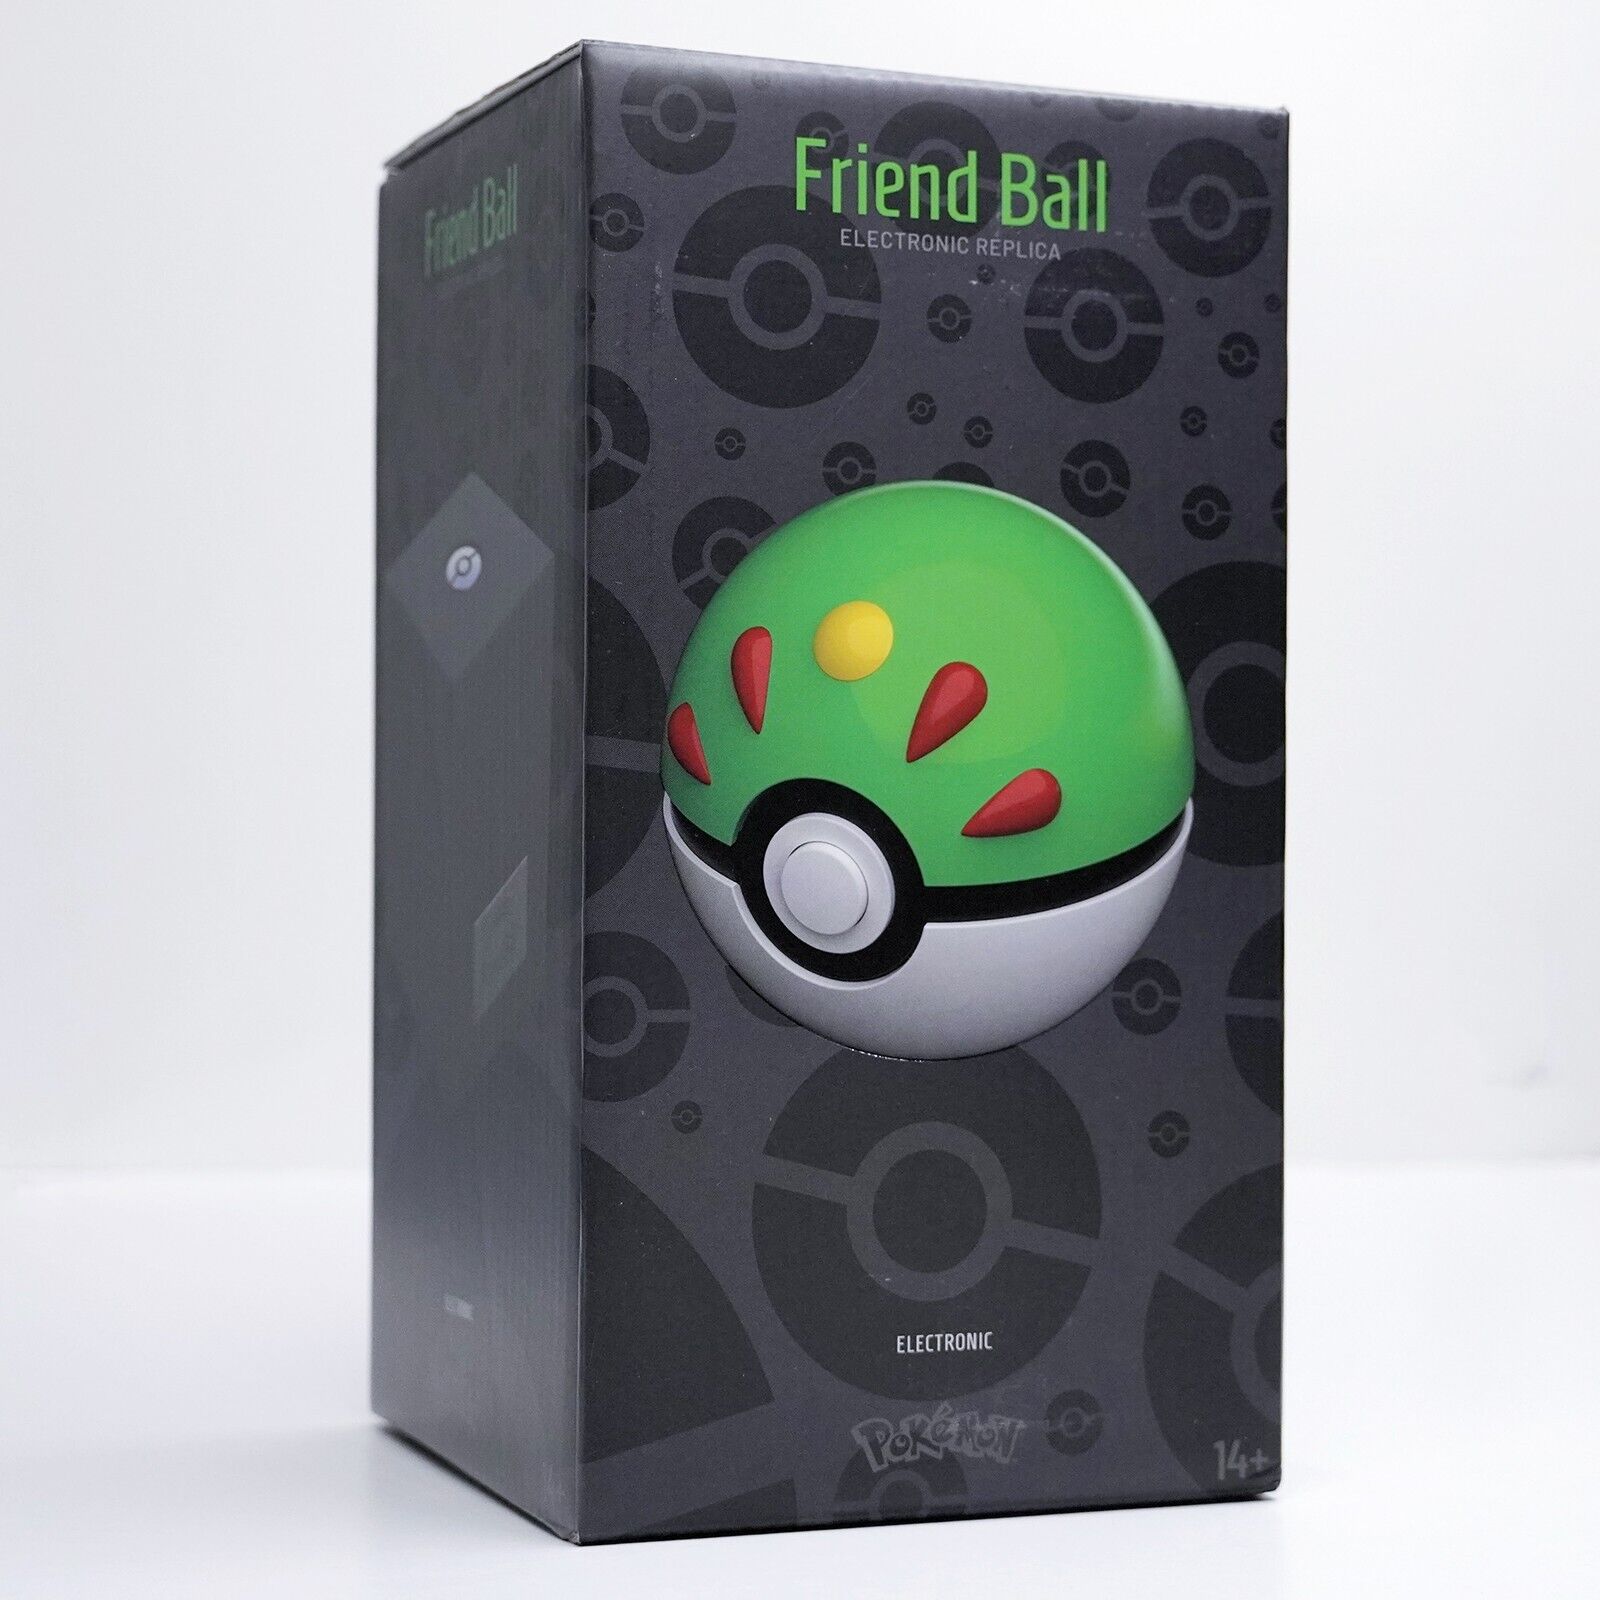 Pokemon Die-Cast Friend Ball Replica by The Wand Company Figure Pokeball